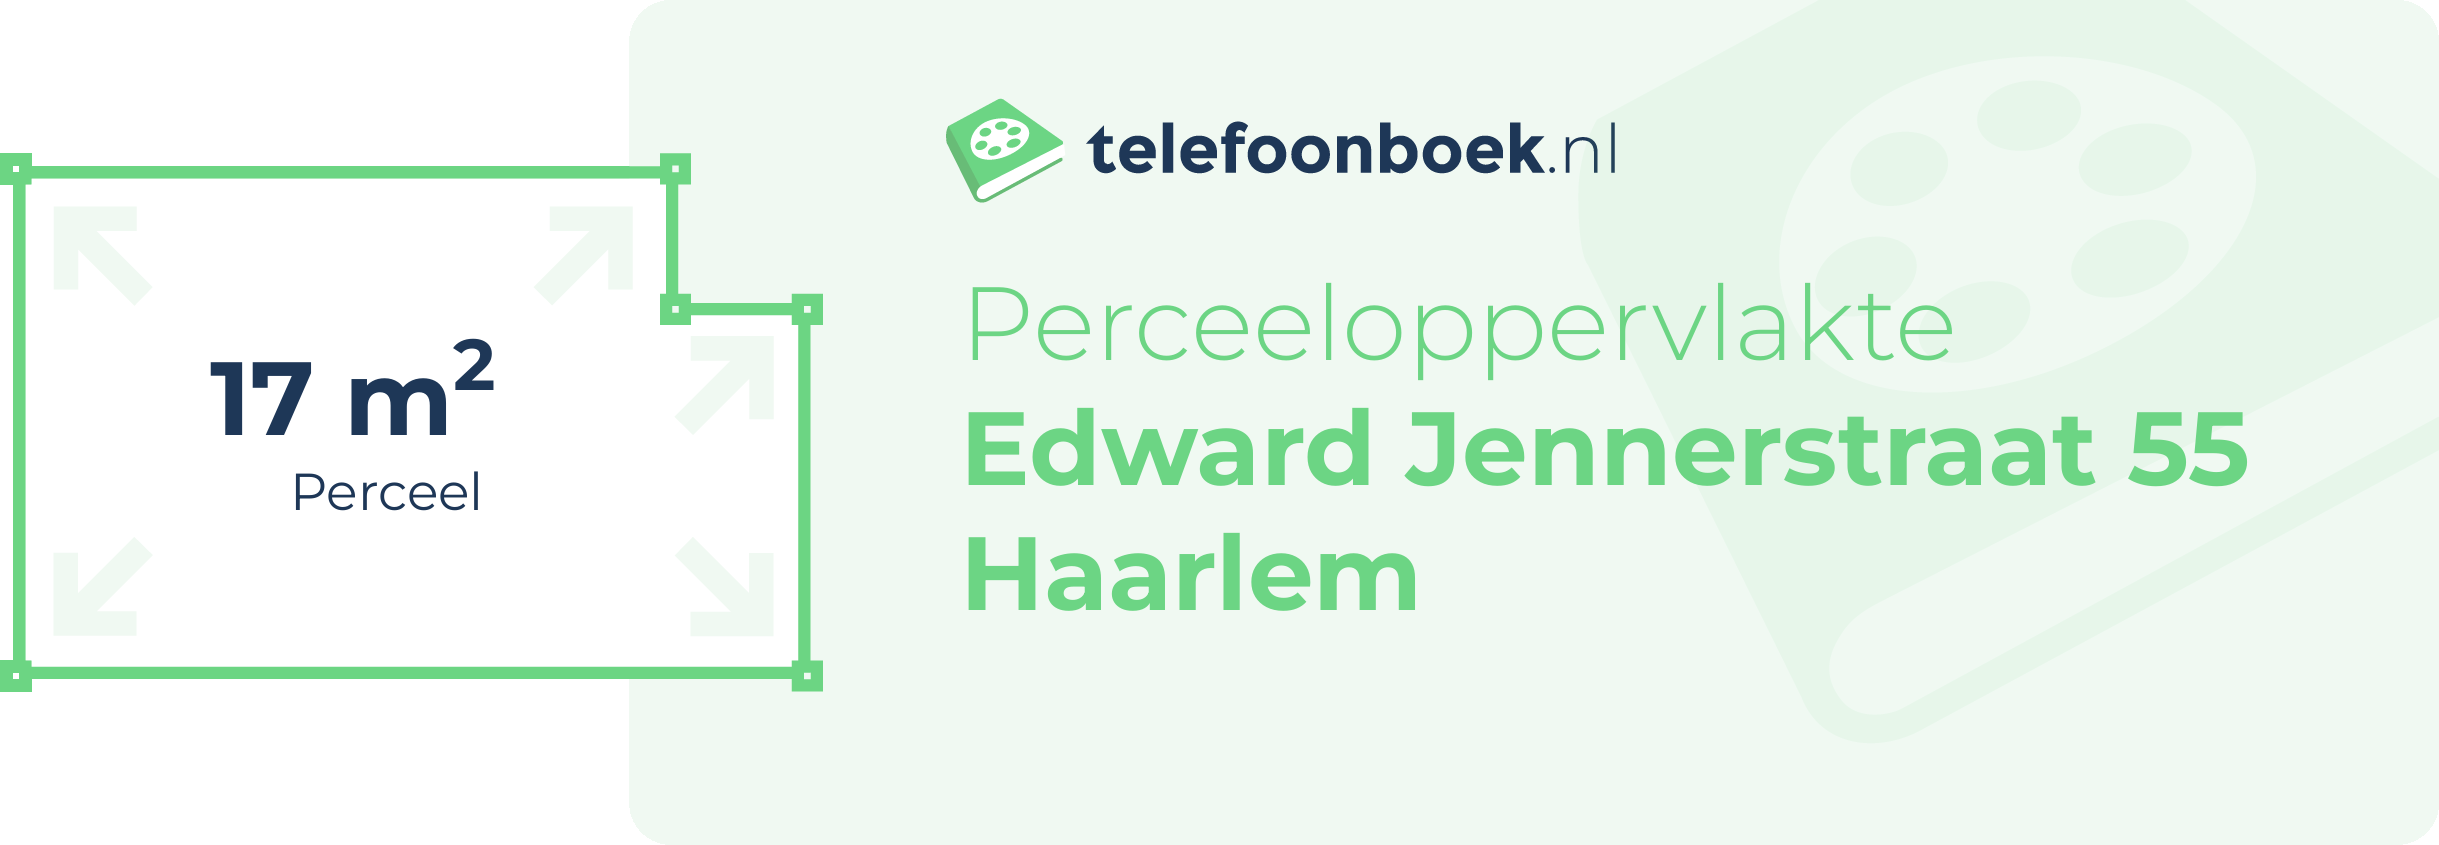 Perceeloppervlakte Edward Jennerstraat 55 Haarlem